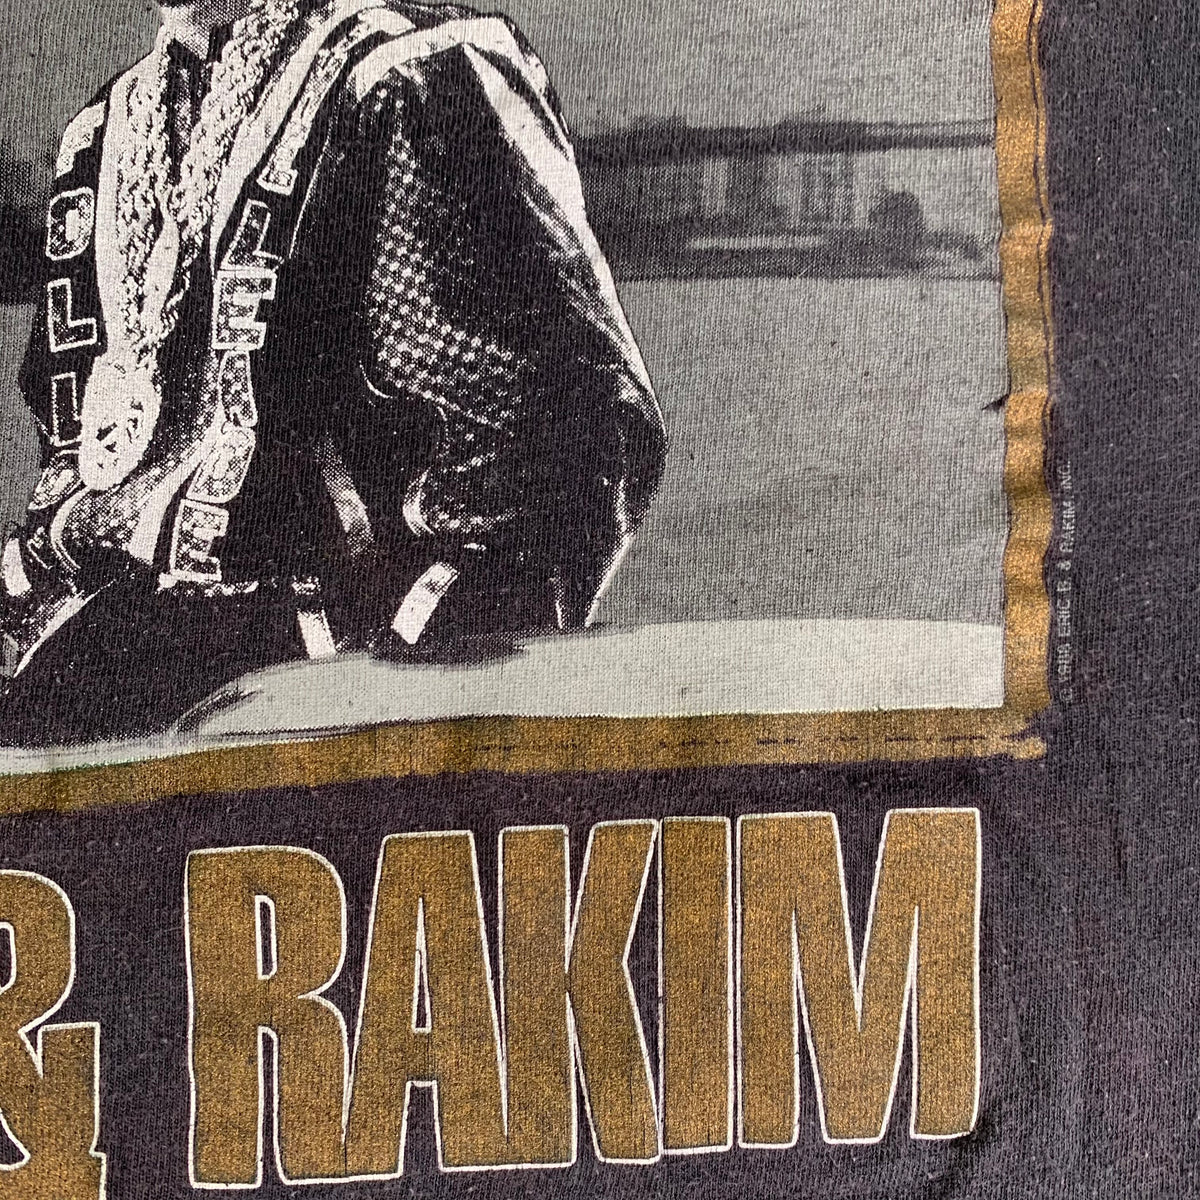 Vintage Eric B &amp; Rakim &quot;Still Paid In Full&quot; T-Shirt